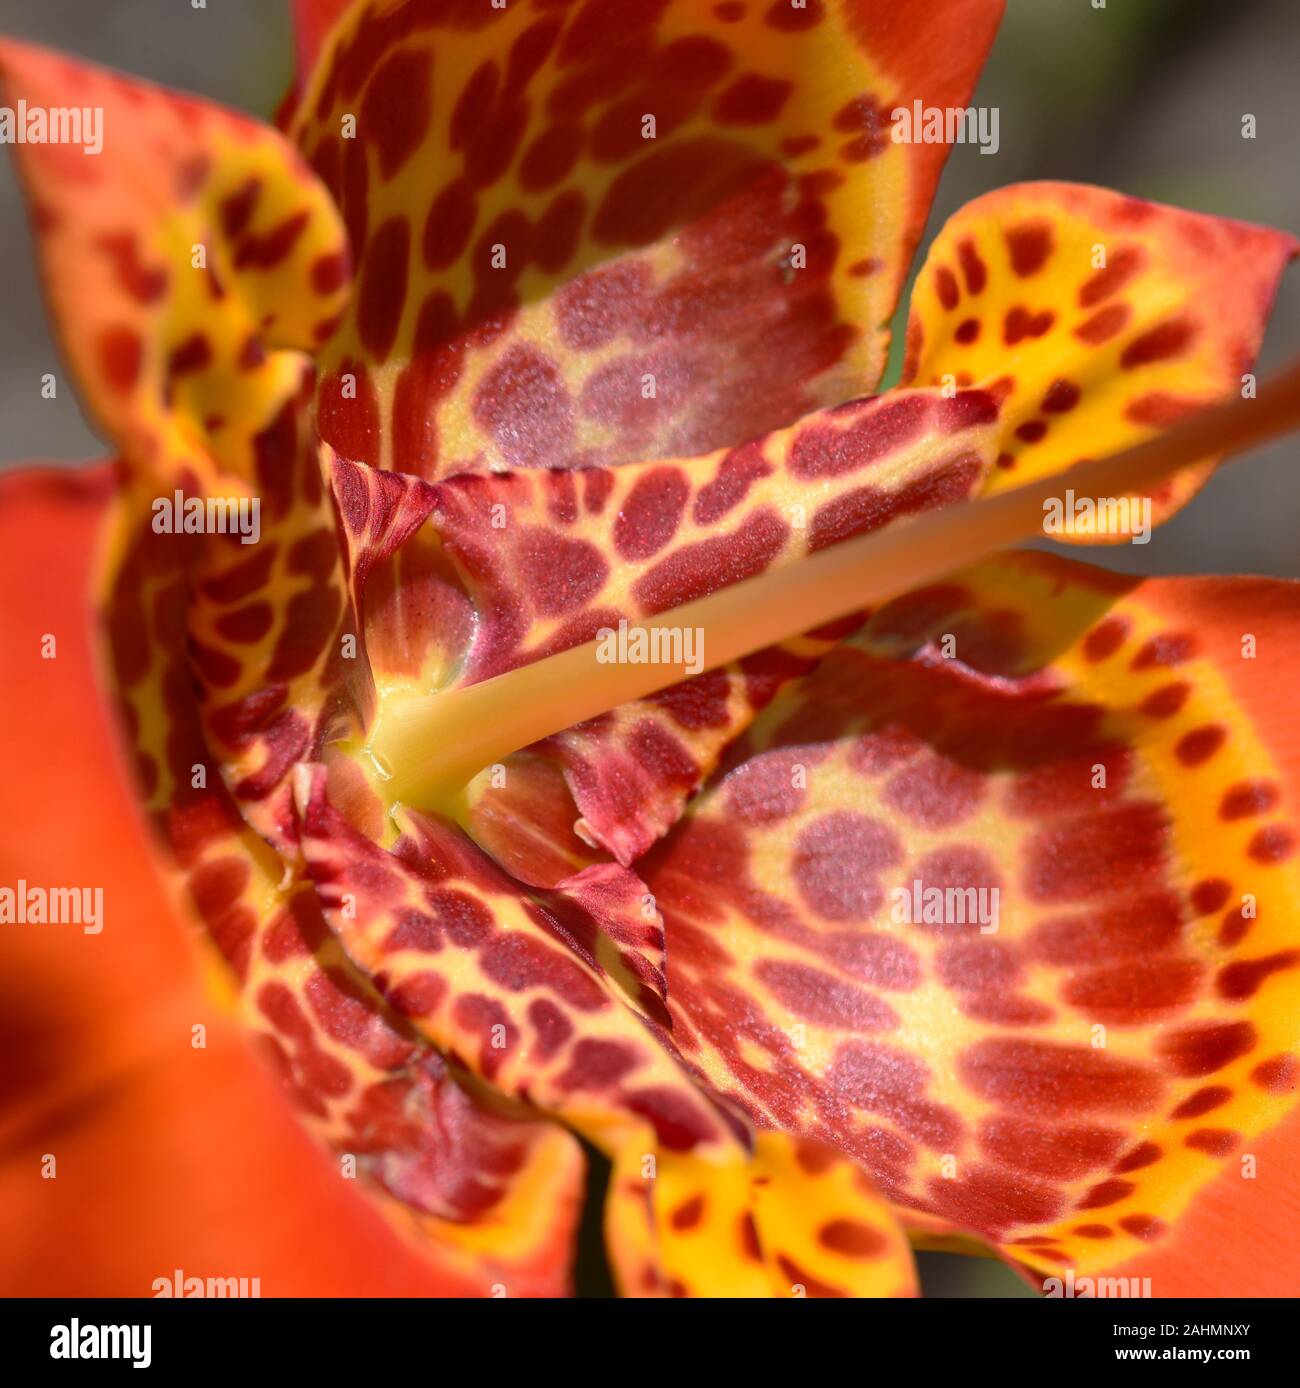 Orange spotted jockey's cap lily Tigridia pavonia flower Stock Photo